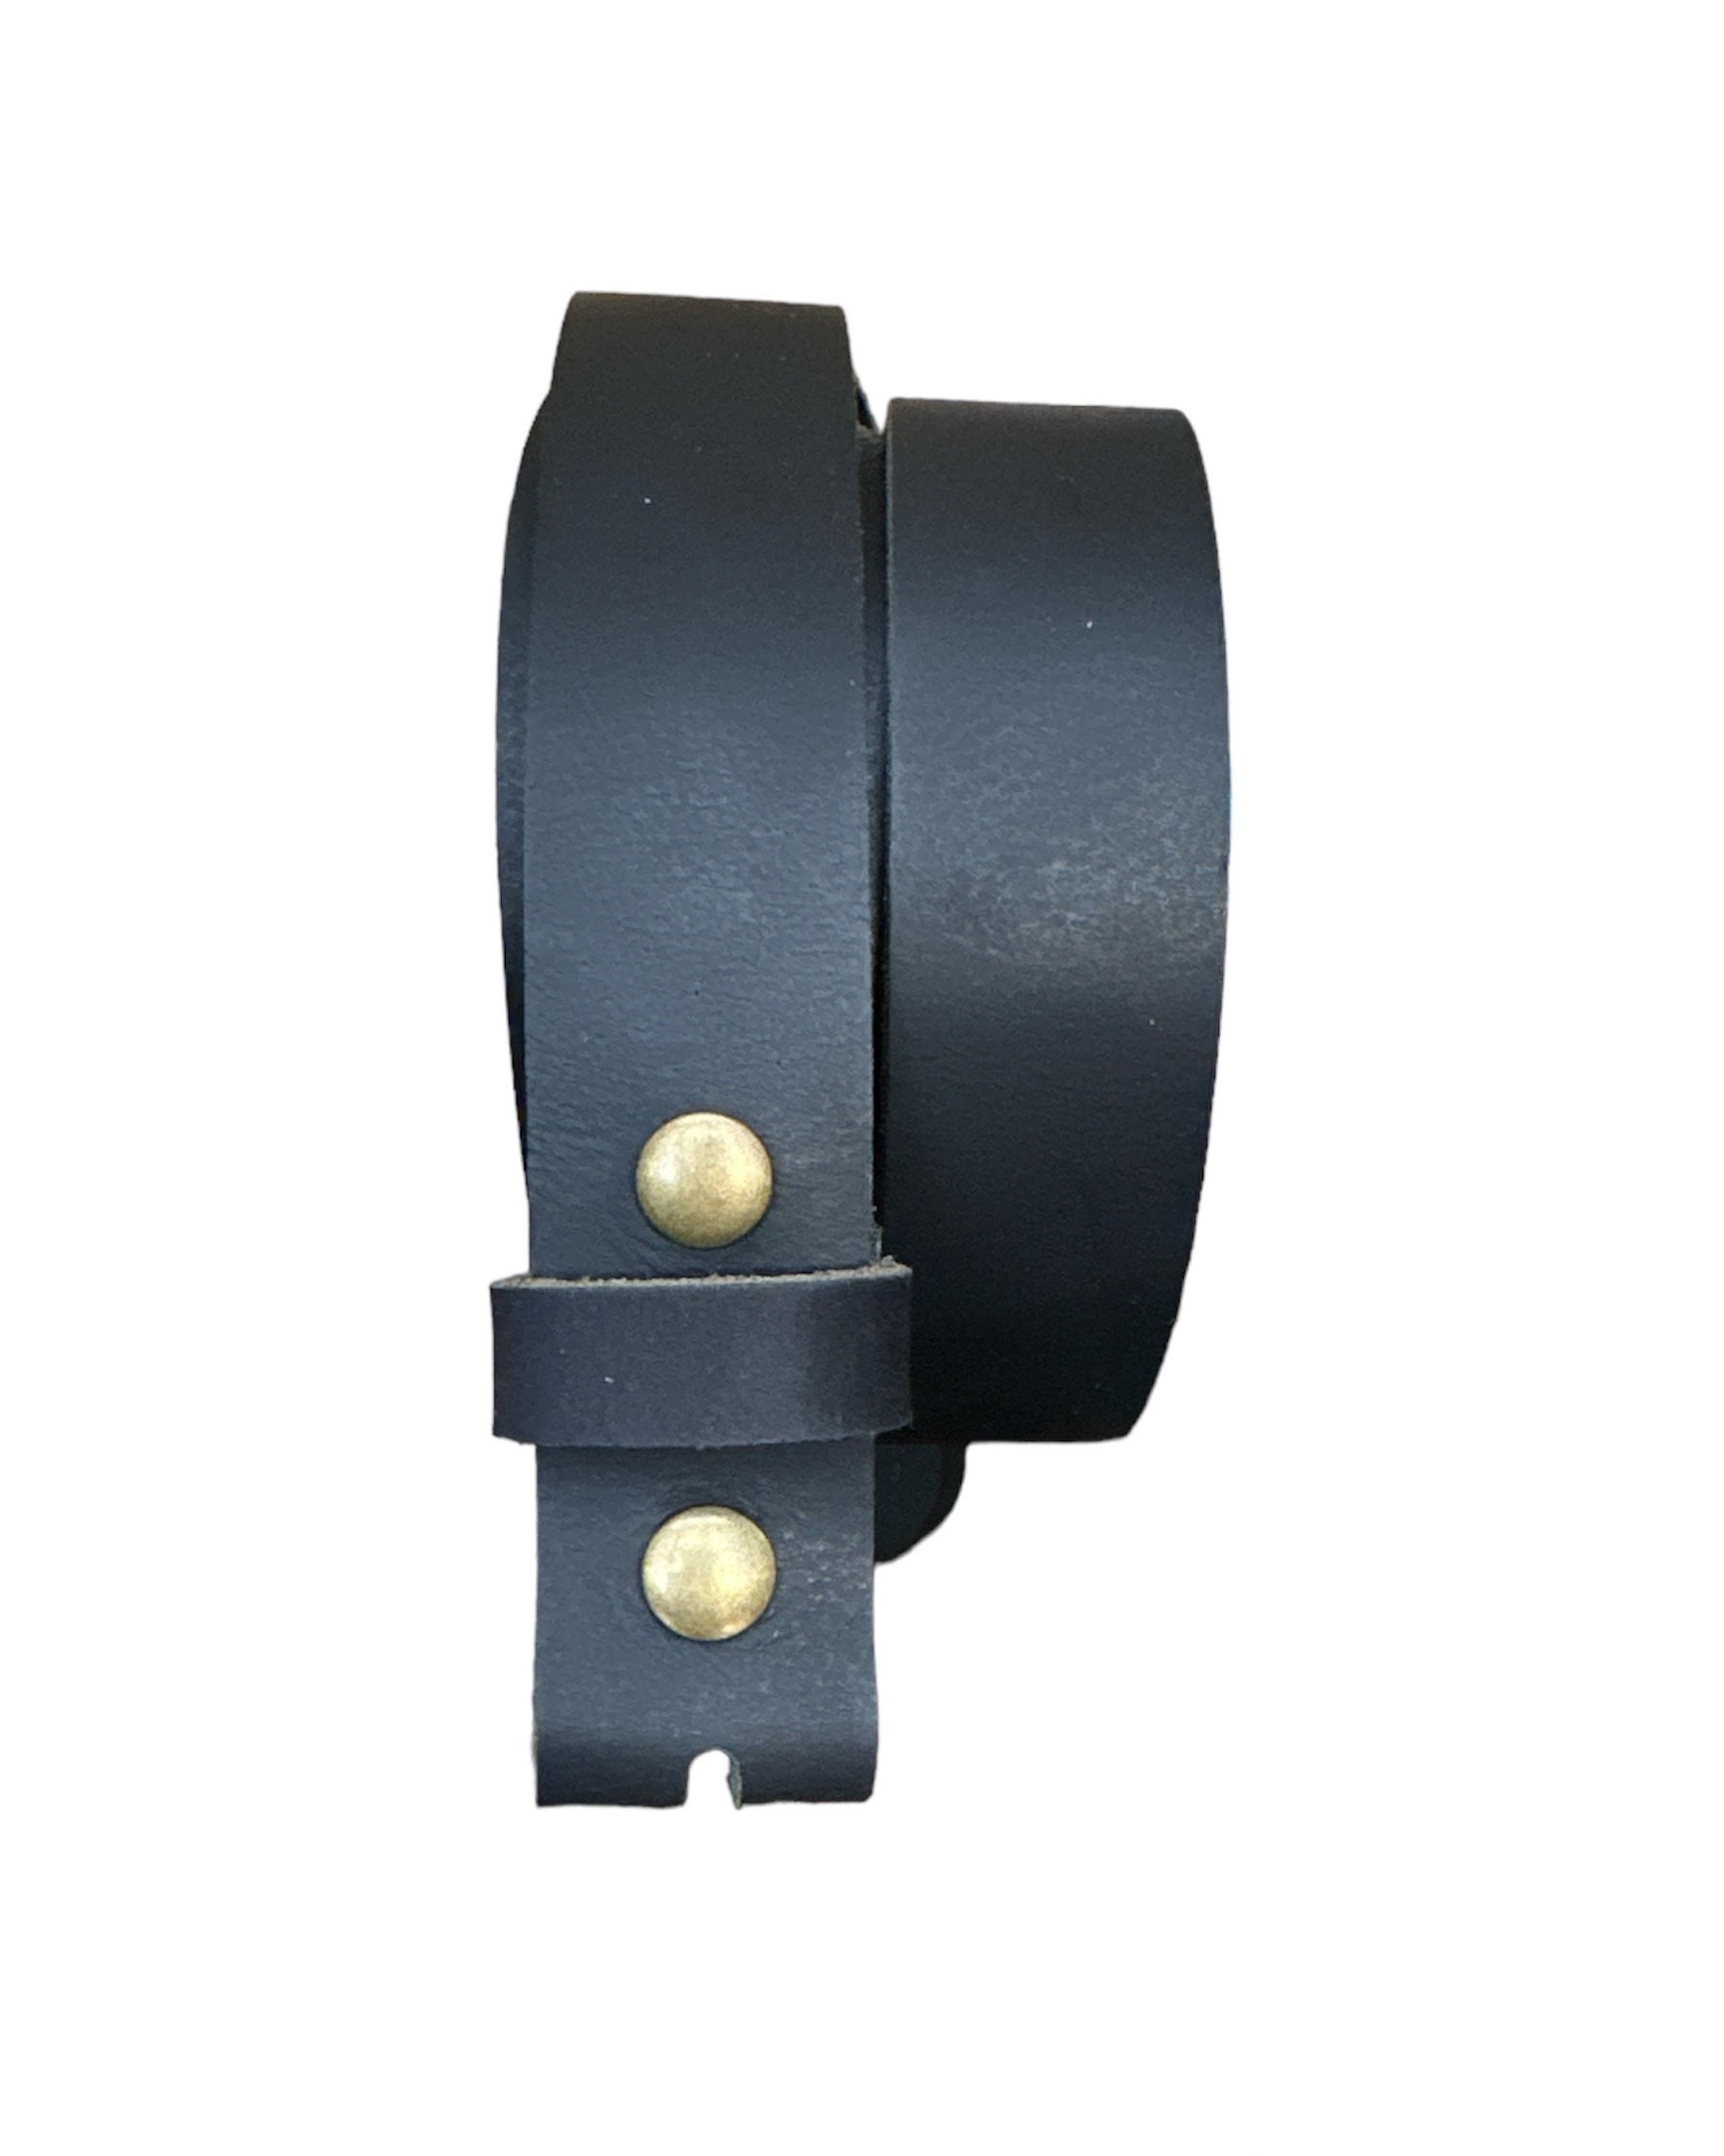 40mm Classy Single Pronged Solid Brass Harness Belt Buckle